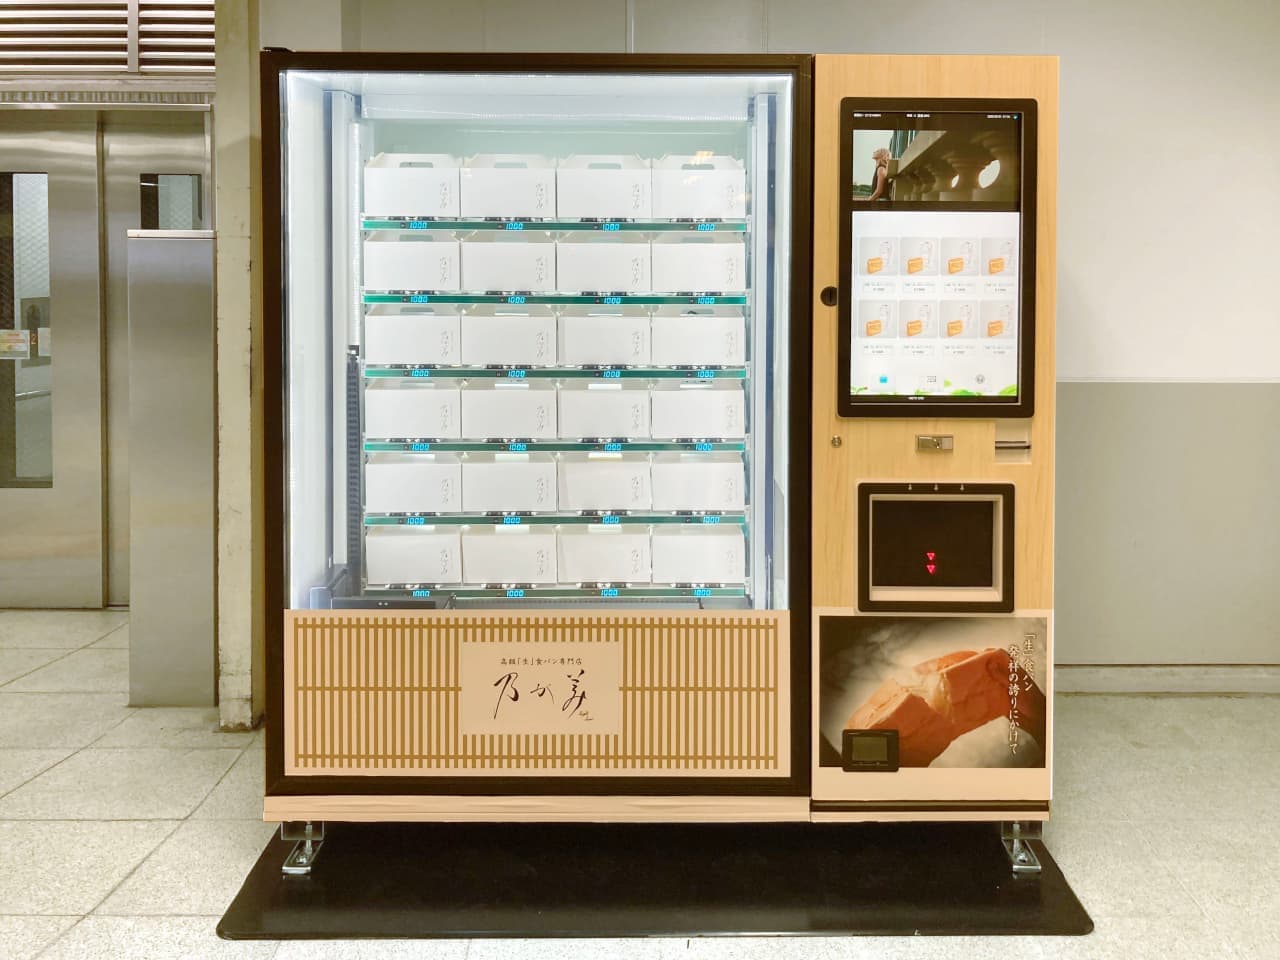 Vending machine dedicated to Nogami's bread